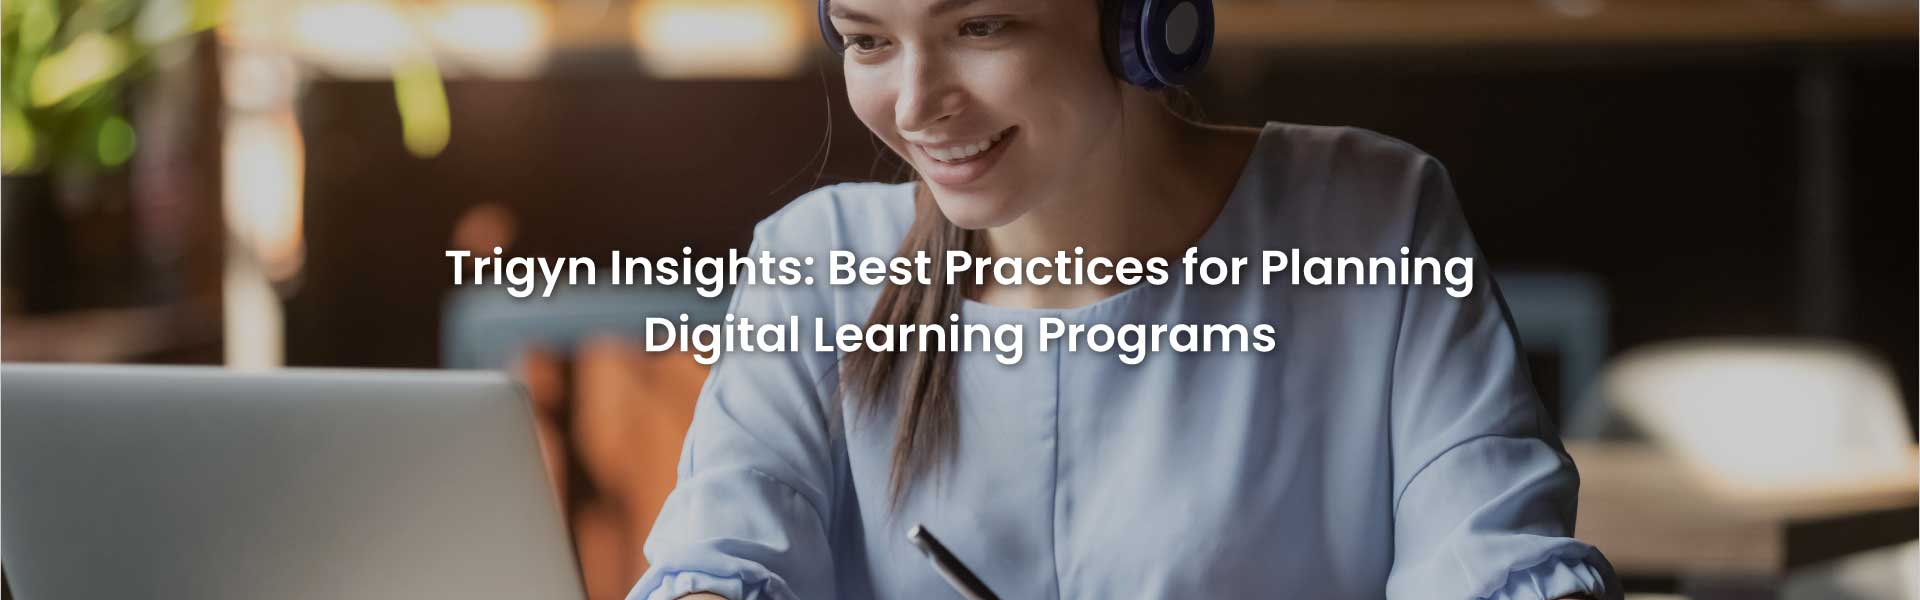 Digital Learning Program Best Practices